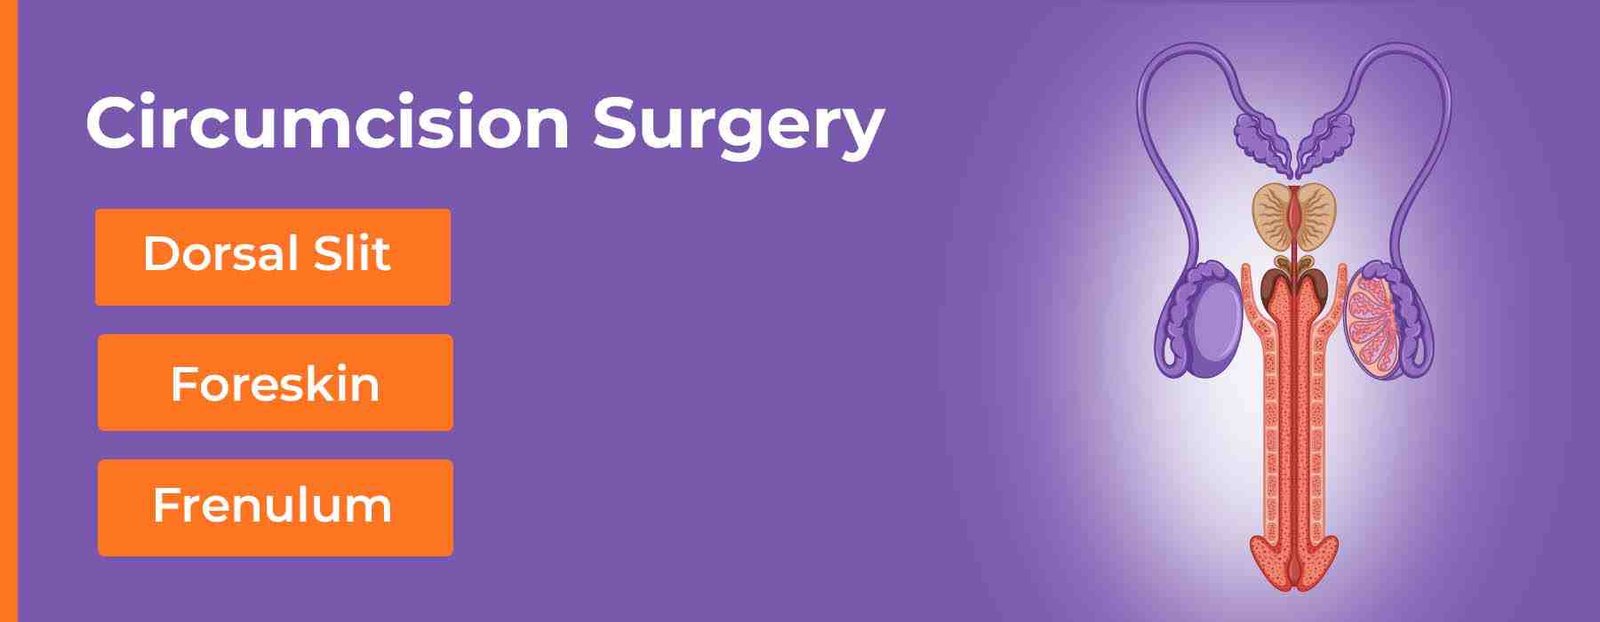 circumcision surgery1